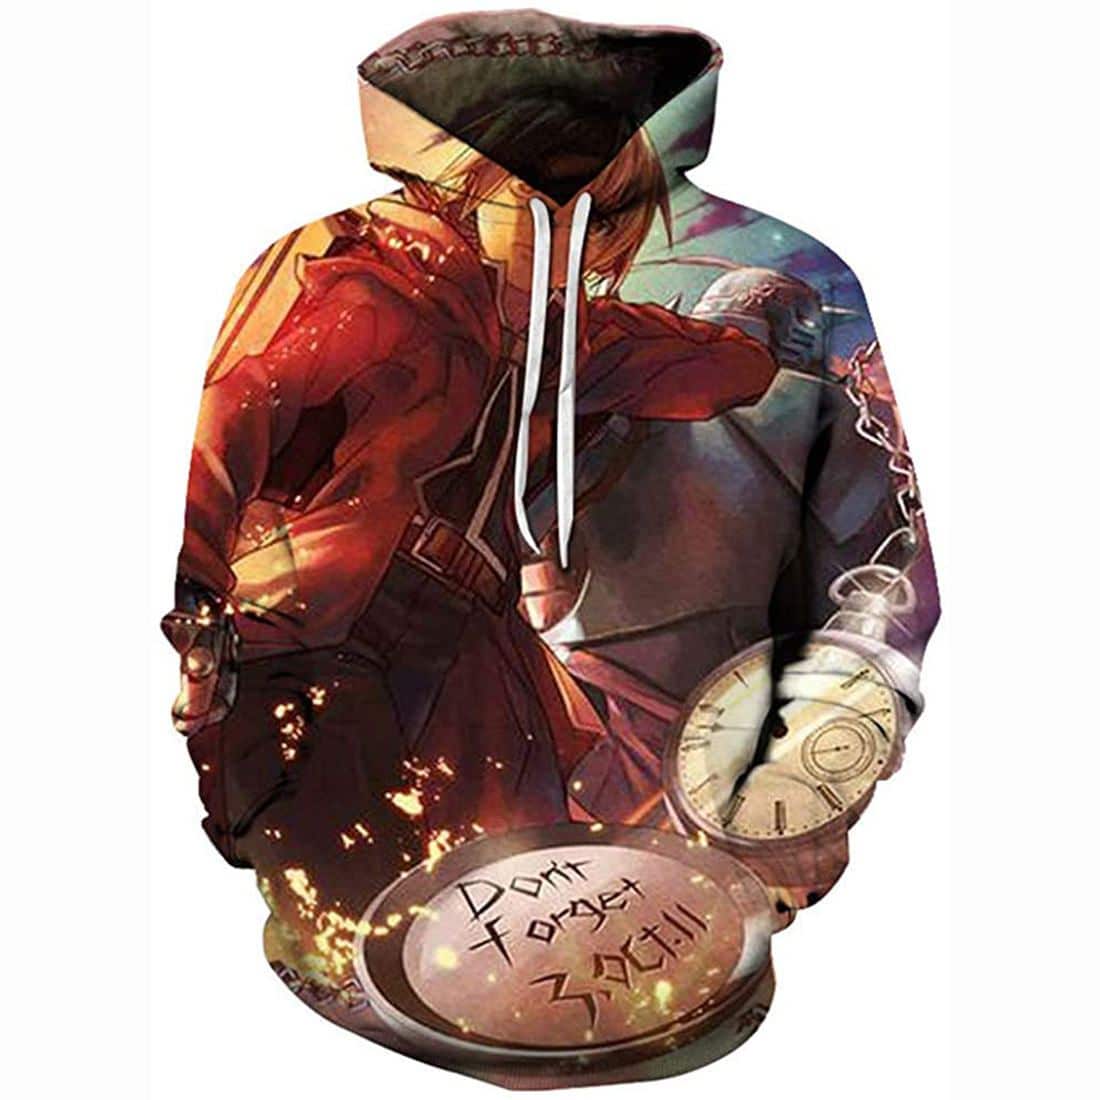 Anime Fullmetal Alchemist 3D printed hoodies Unisex pullover hoodie sweater